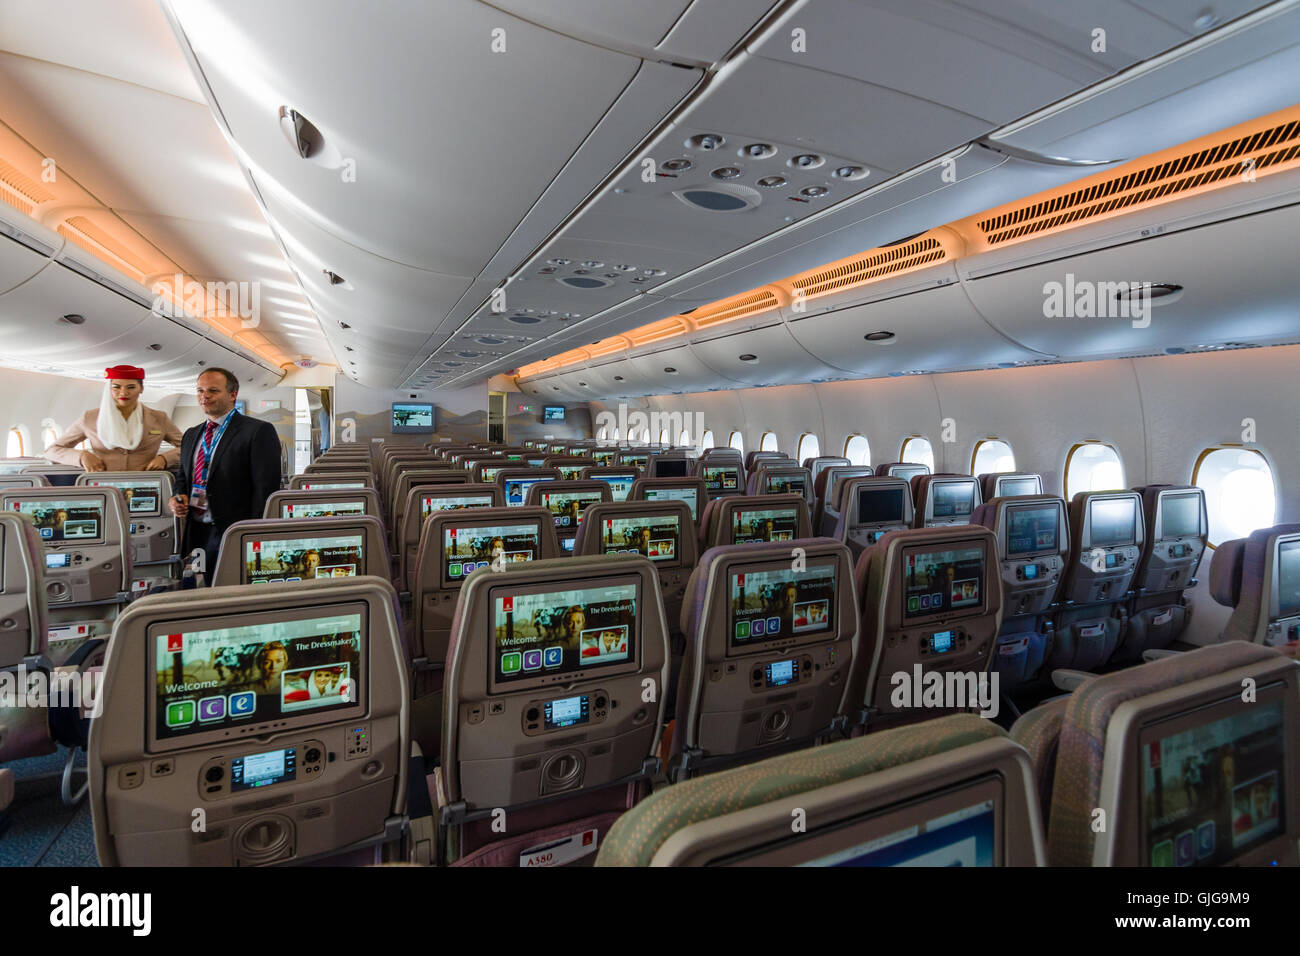 Airbus A380 Interior Stock Photos Airbus A380 Interior